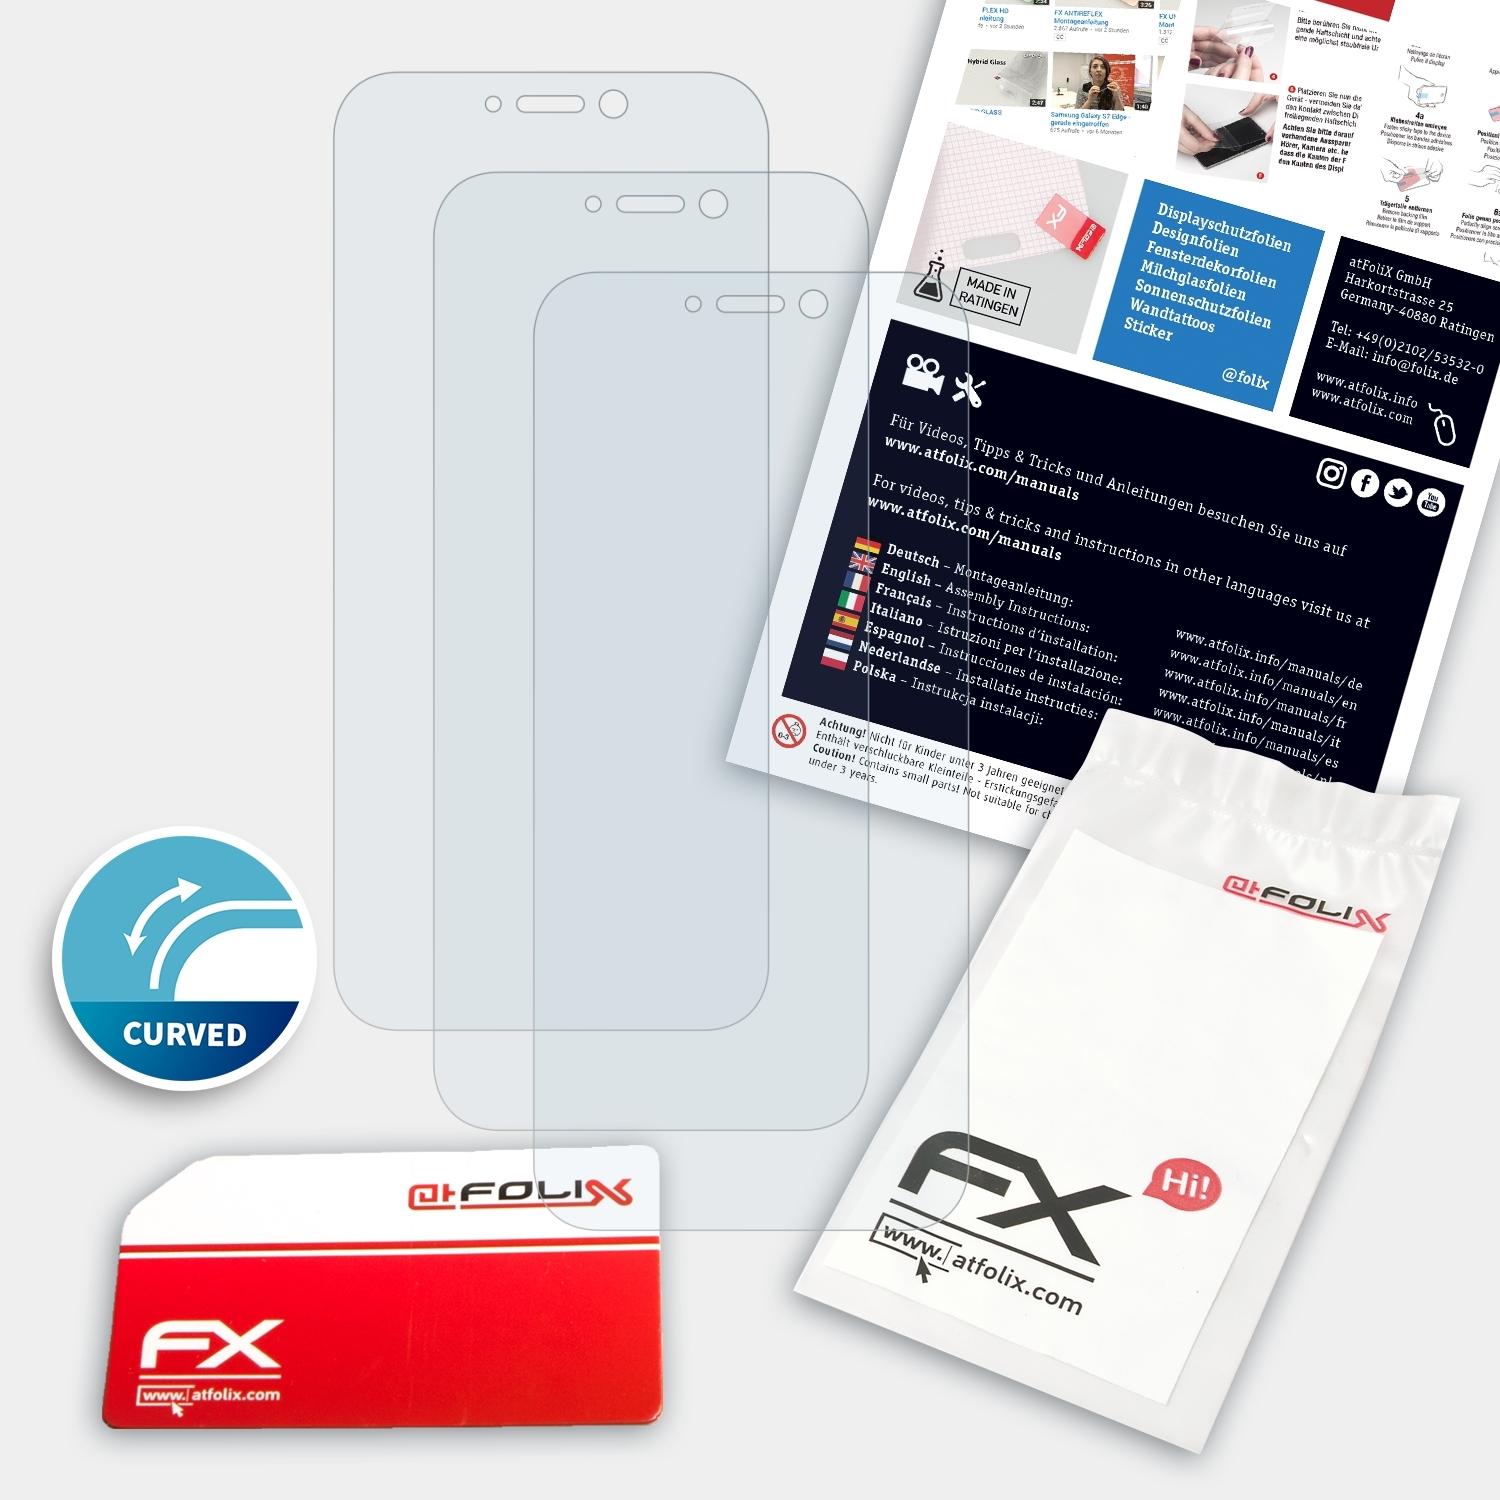 ATFOLIX 3x Oukitel Pro) WP5 FX-ActiFleX Displayschutz(für